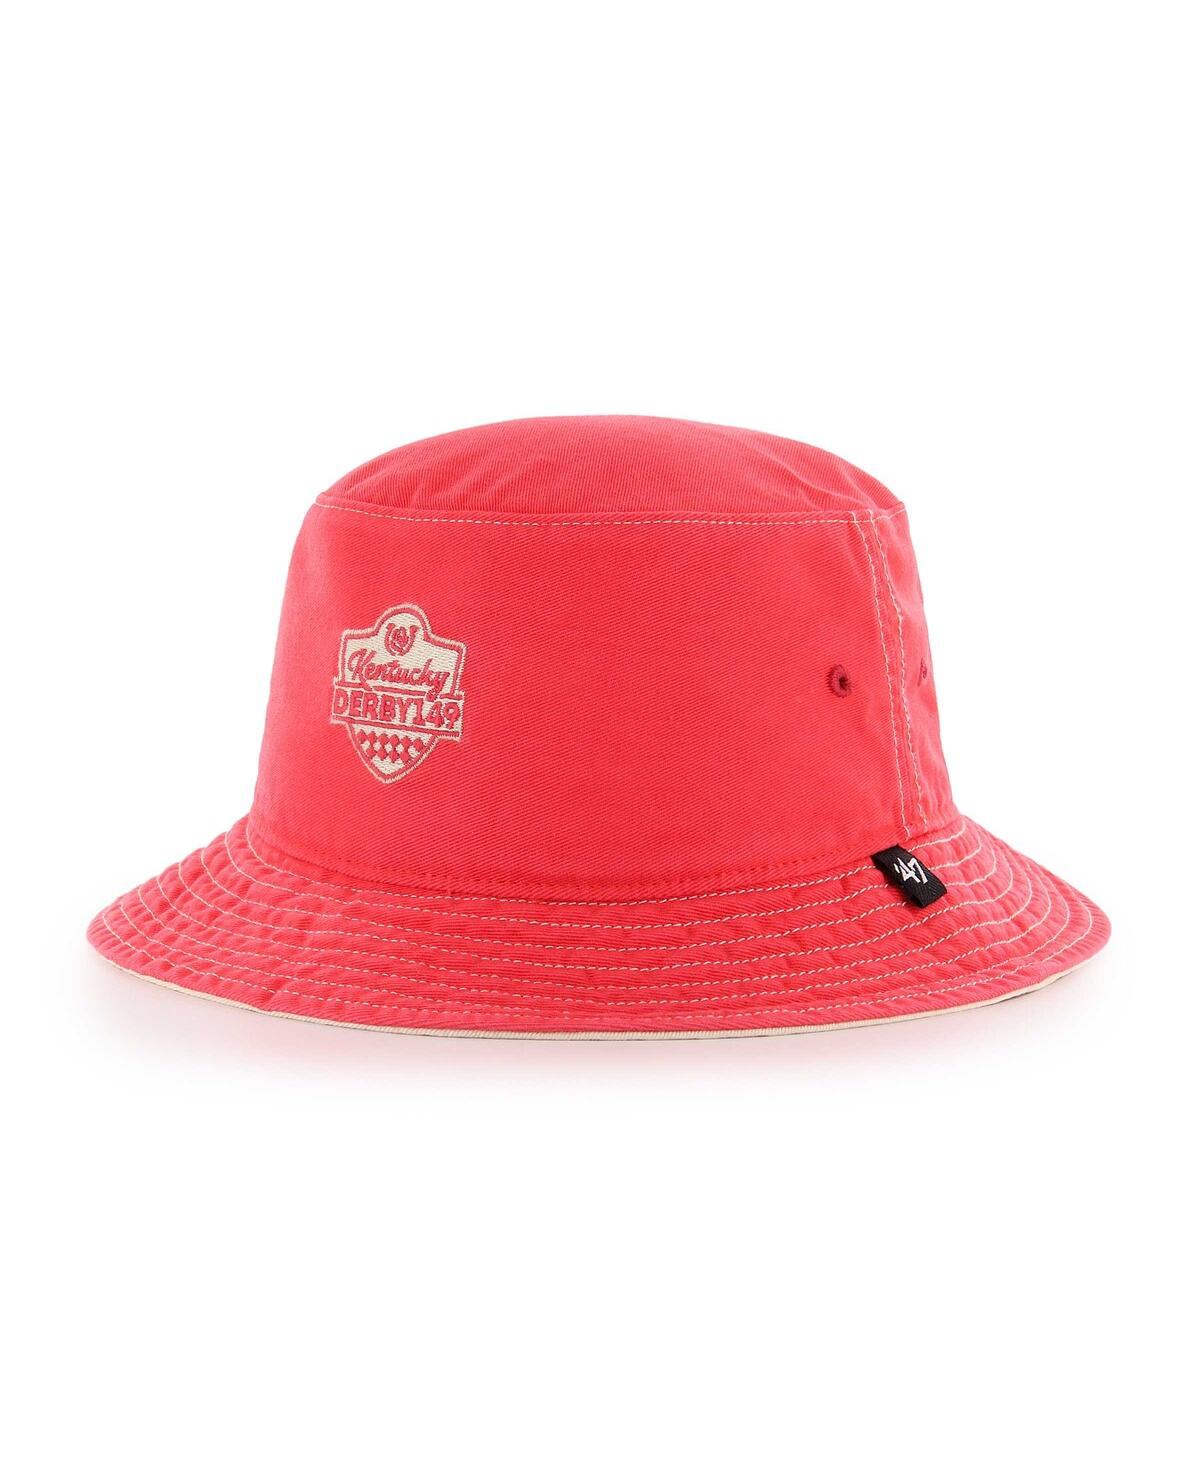 47 Brand Men's ' Red Kentucky Derby 149 Trailhead Bucket Hat